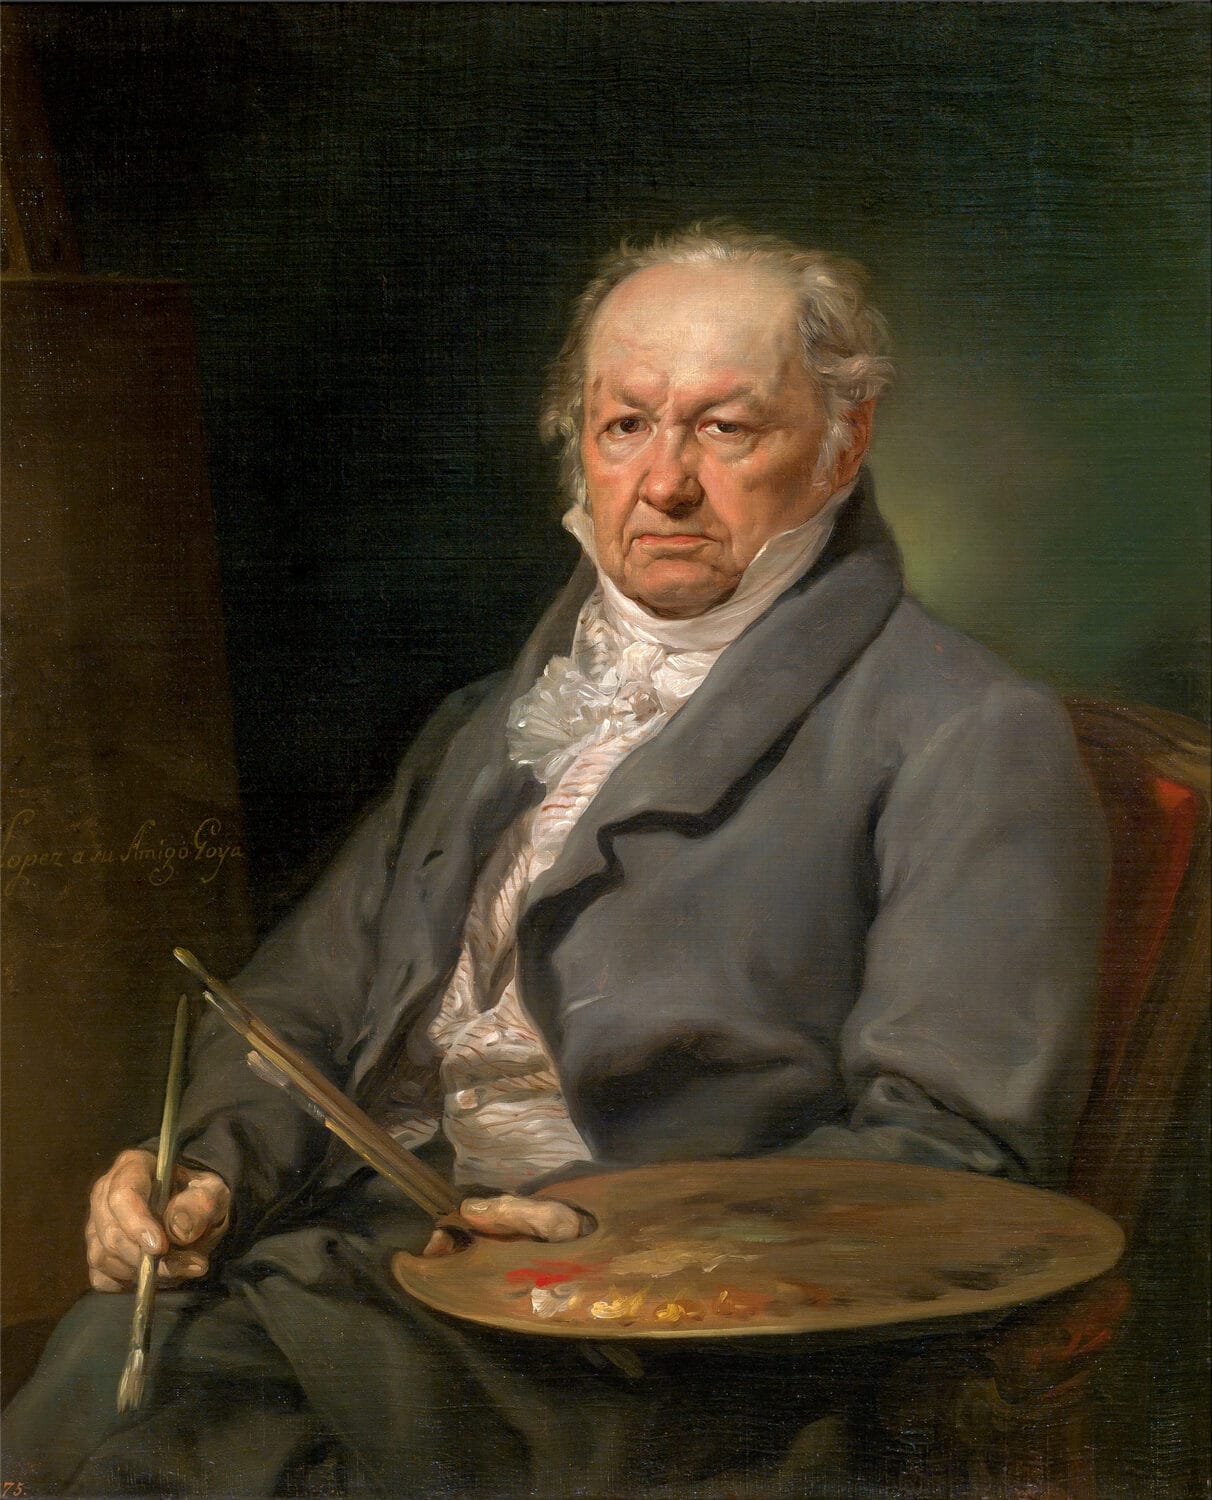 Portrait of the painter Francisco de Goya (1826), by Vicente López, Museo del Prado, Madrid.